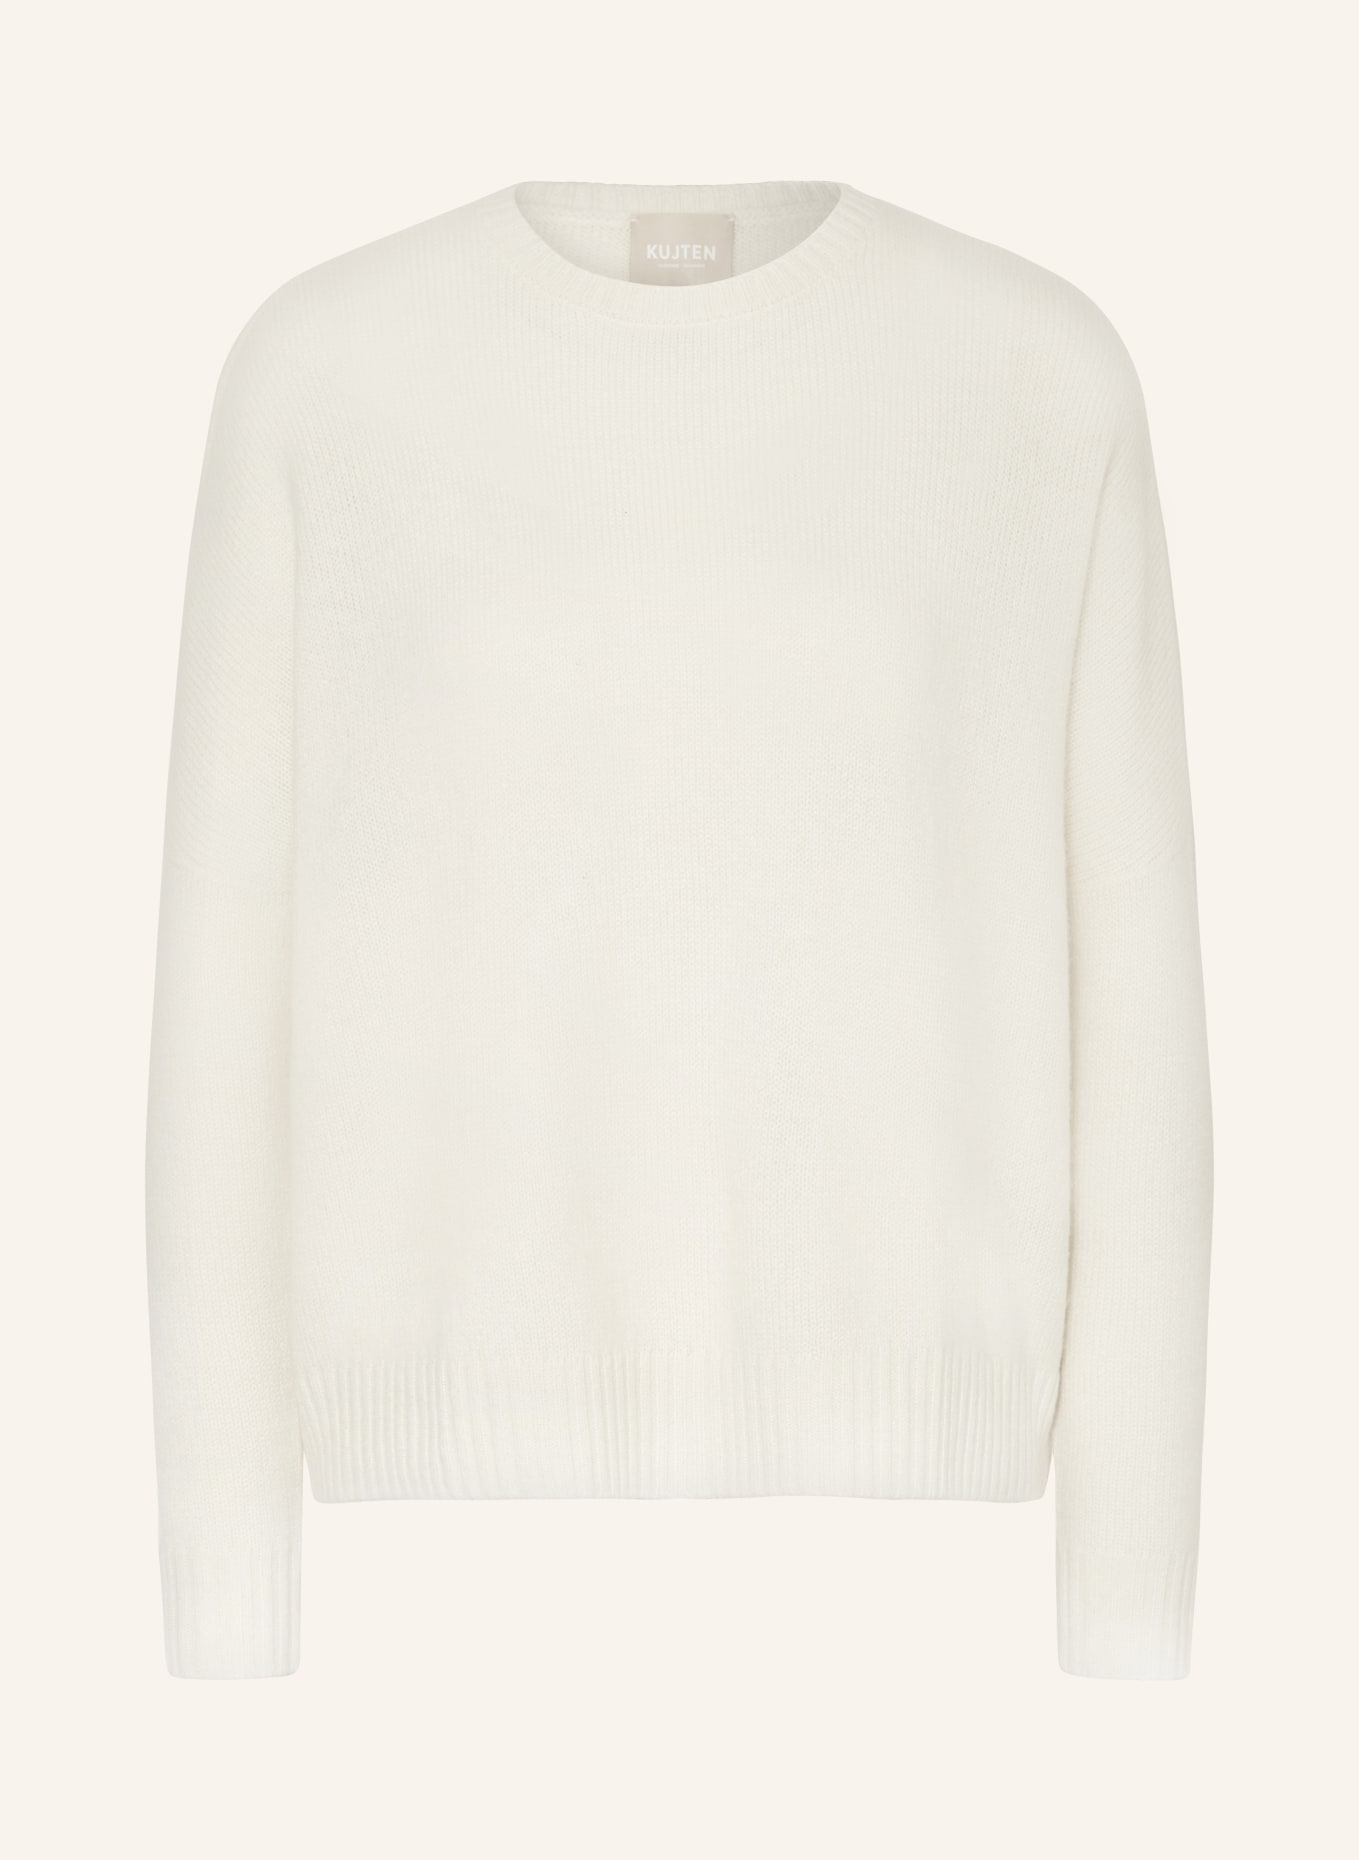 KUJTEN Cashmere-Pullover AMELIE, Farbe: ECRU (Bild 1)